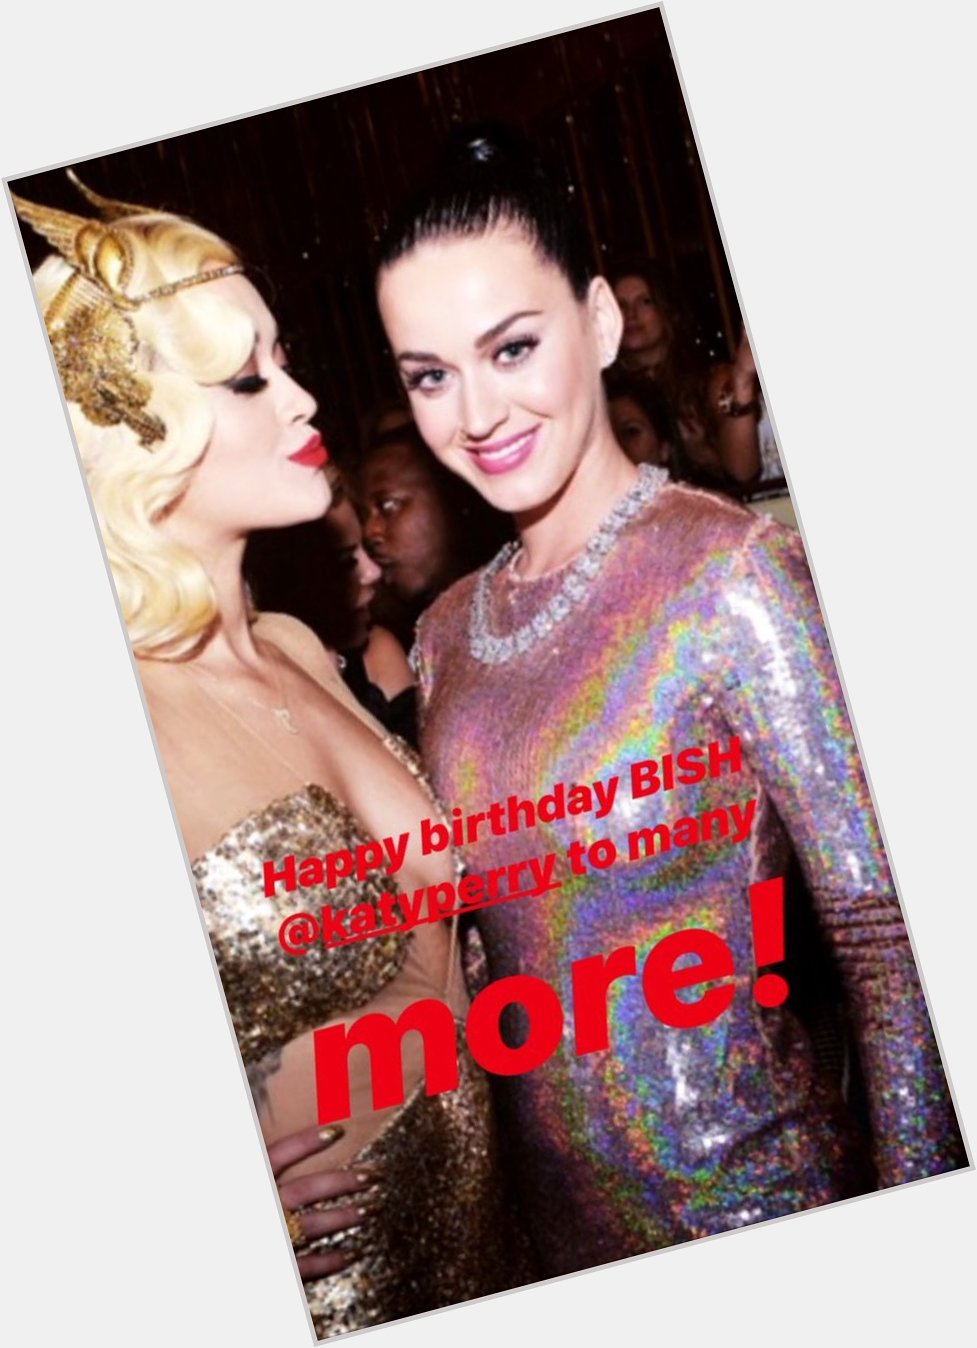  | wishing a Happy Birthday to Katy Perry, via Instagram Stories. 